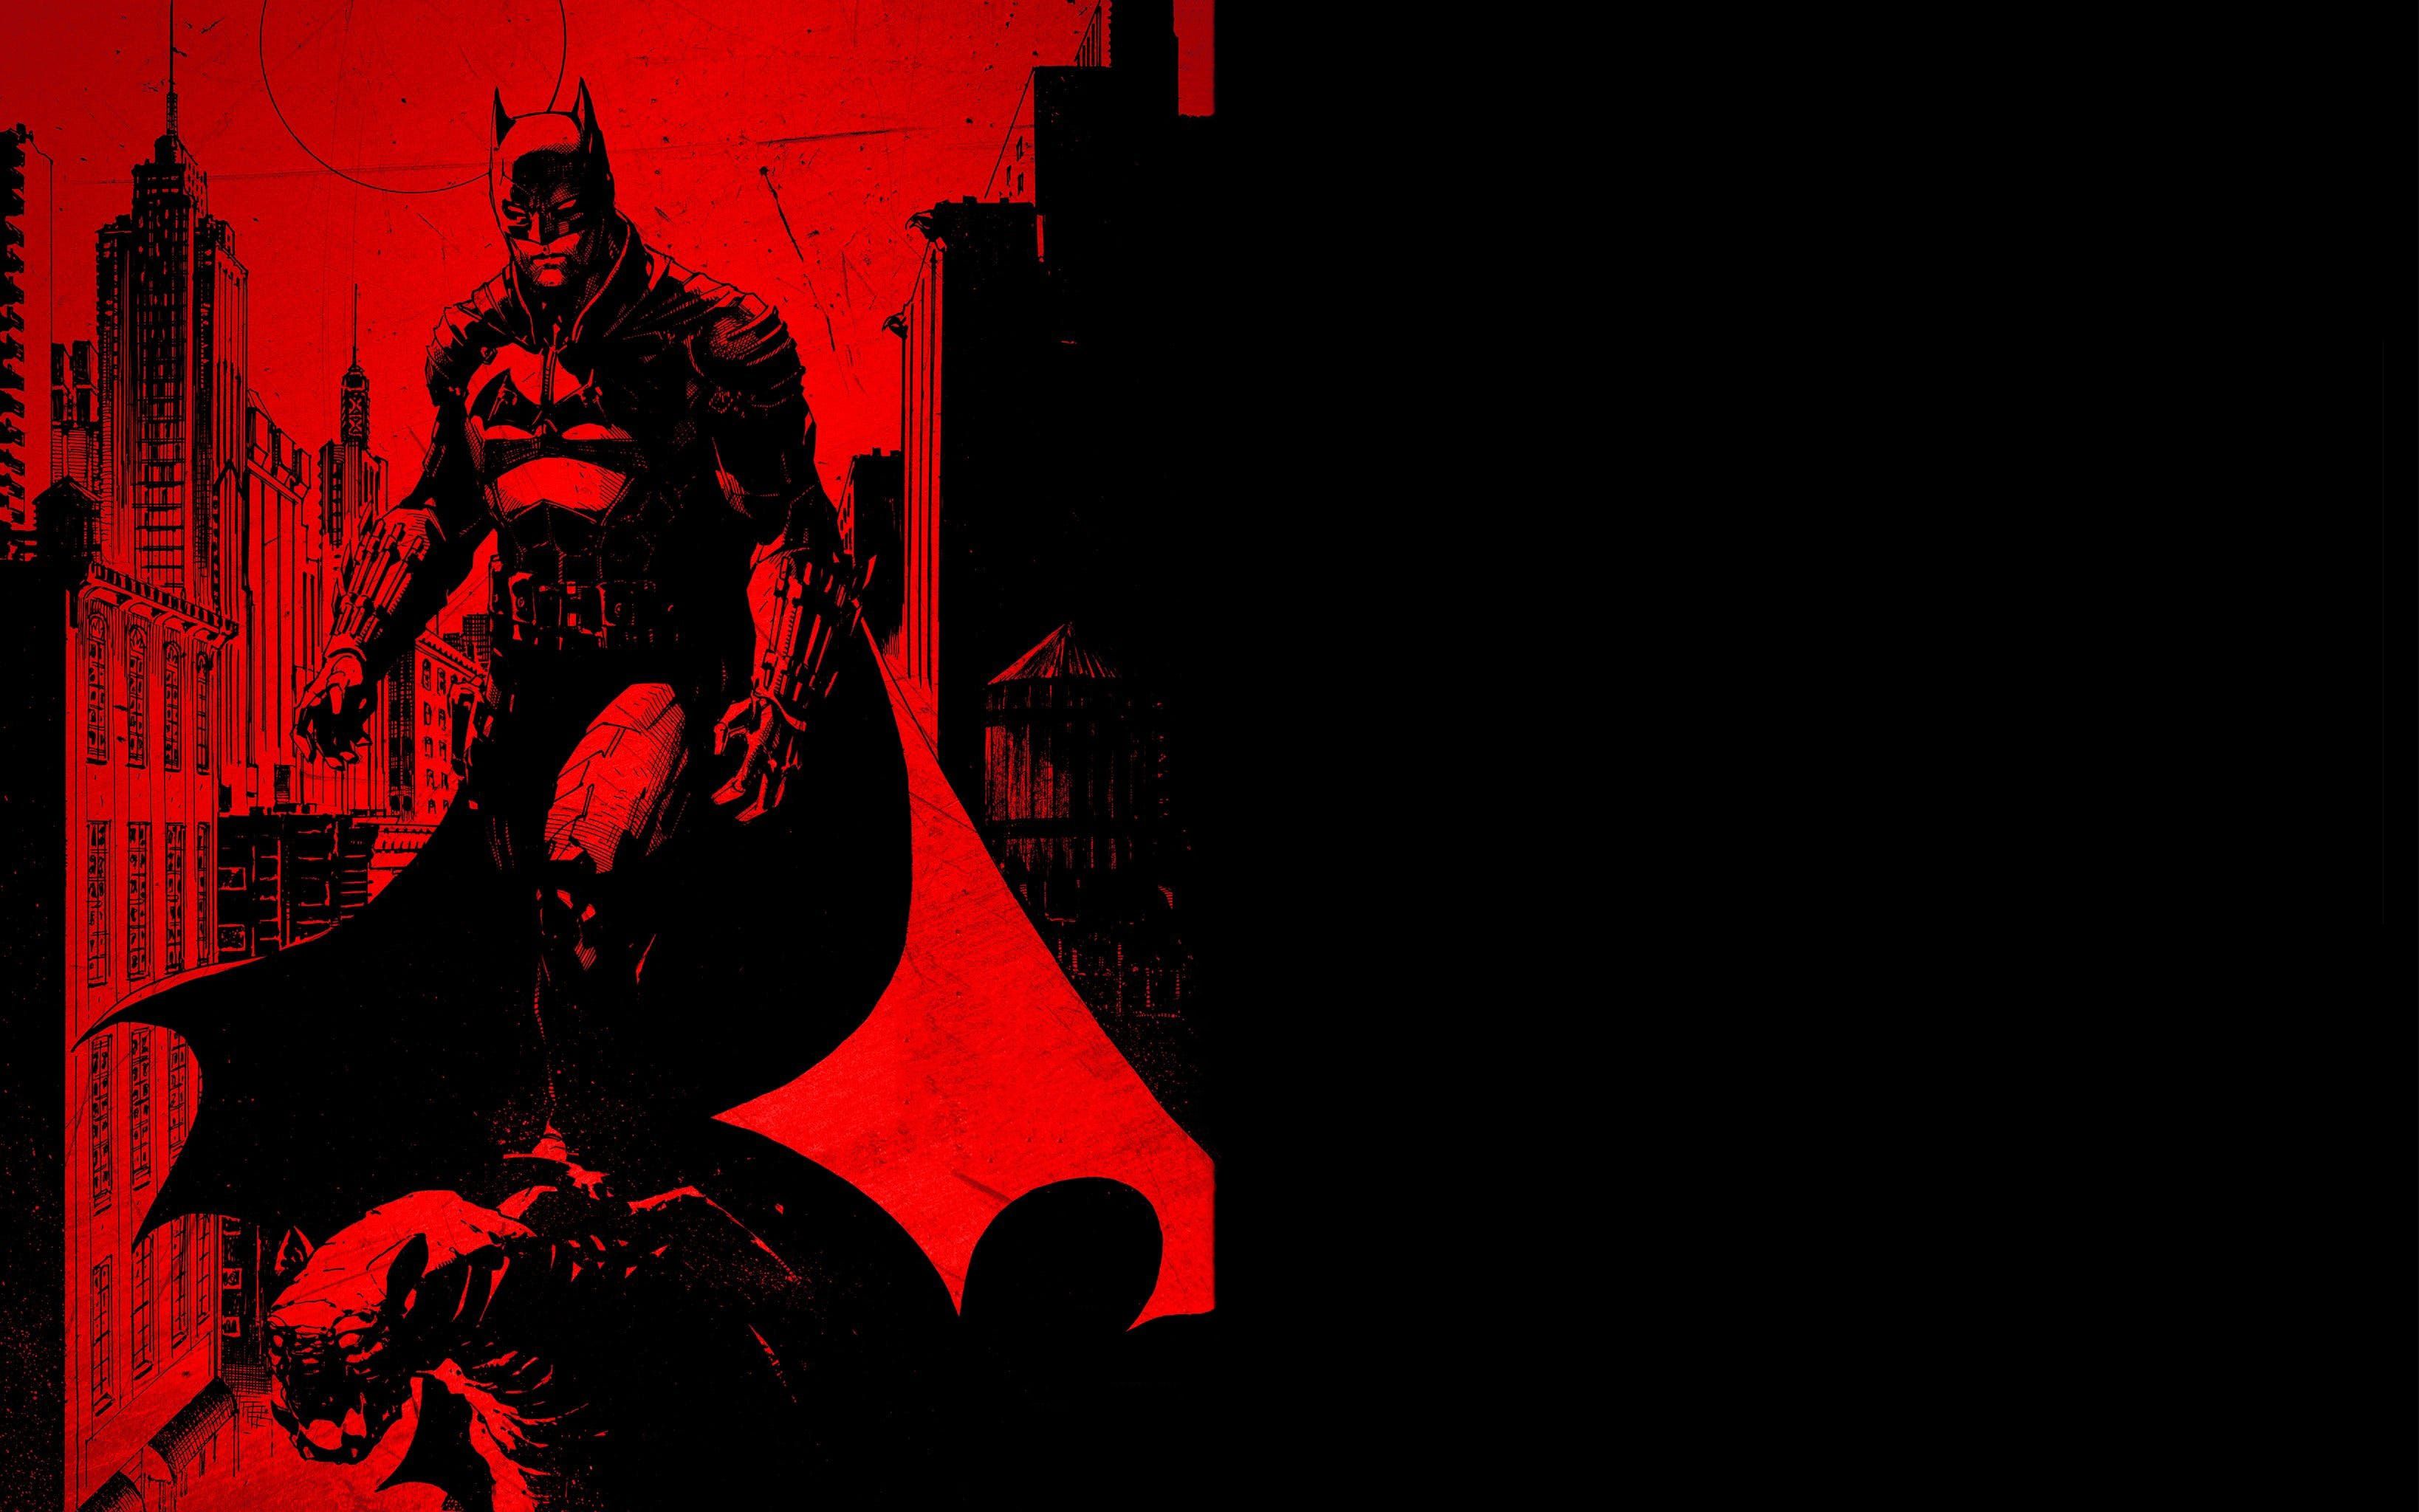 Batman 2021 Poster Wallpaper, HD Movies 4K Wallpaper, Image, Photo and Background